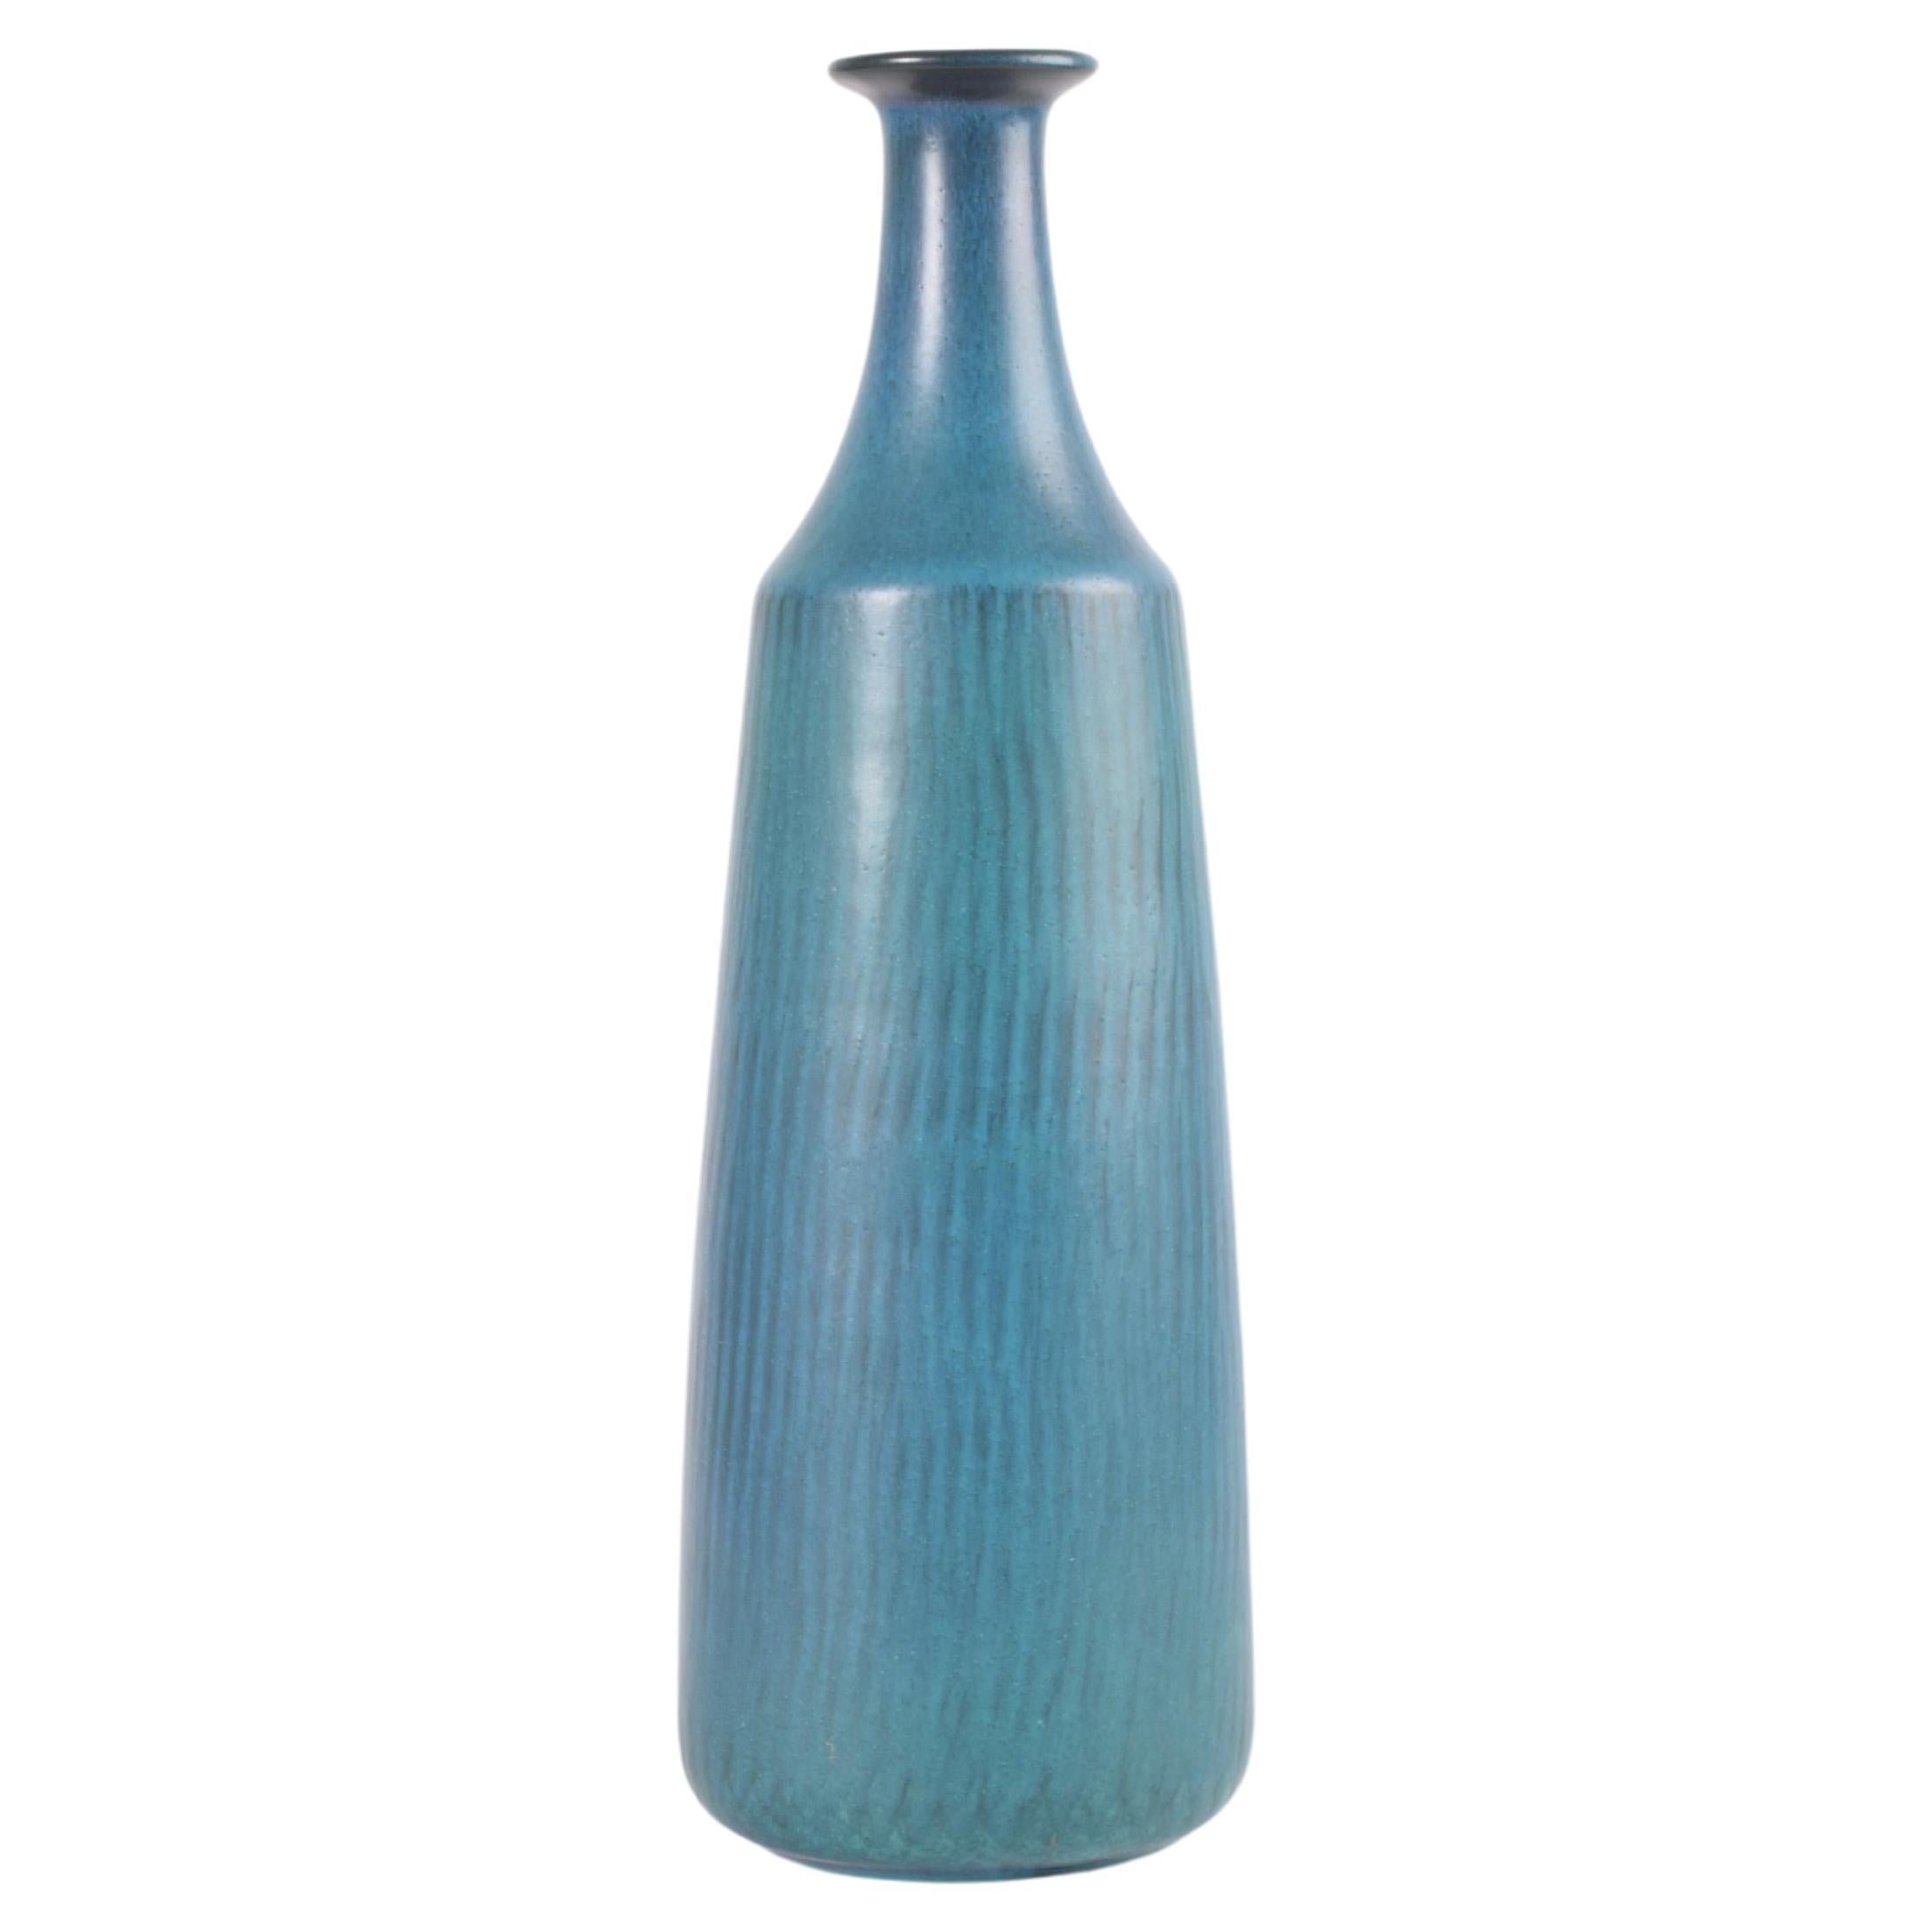 Gunnar Nylund for Nymølle Tall Vase Turquoise Blue, Scandinavian Modern 1960s For Sale